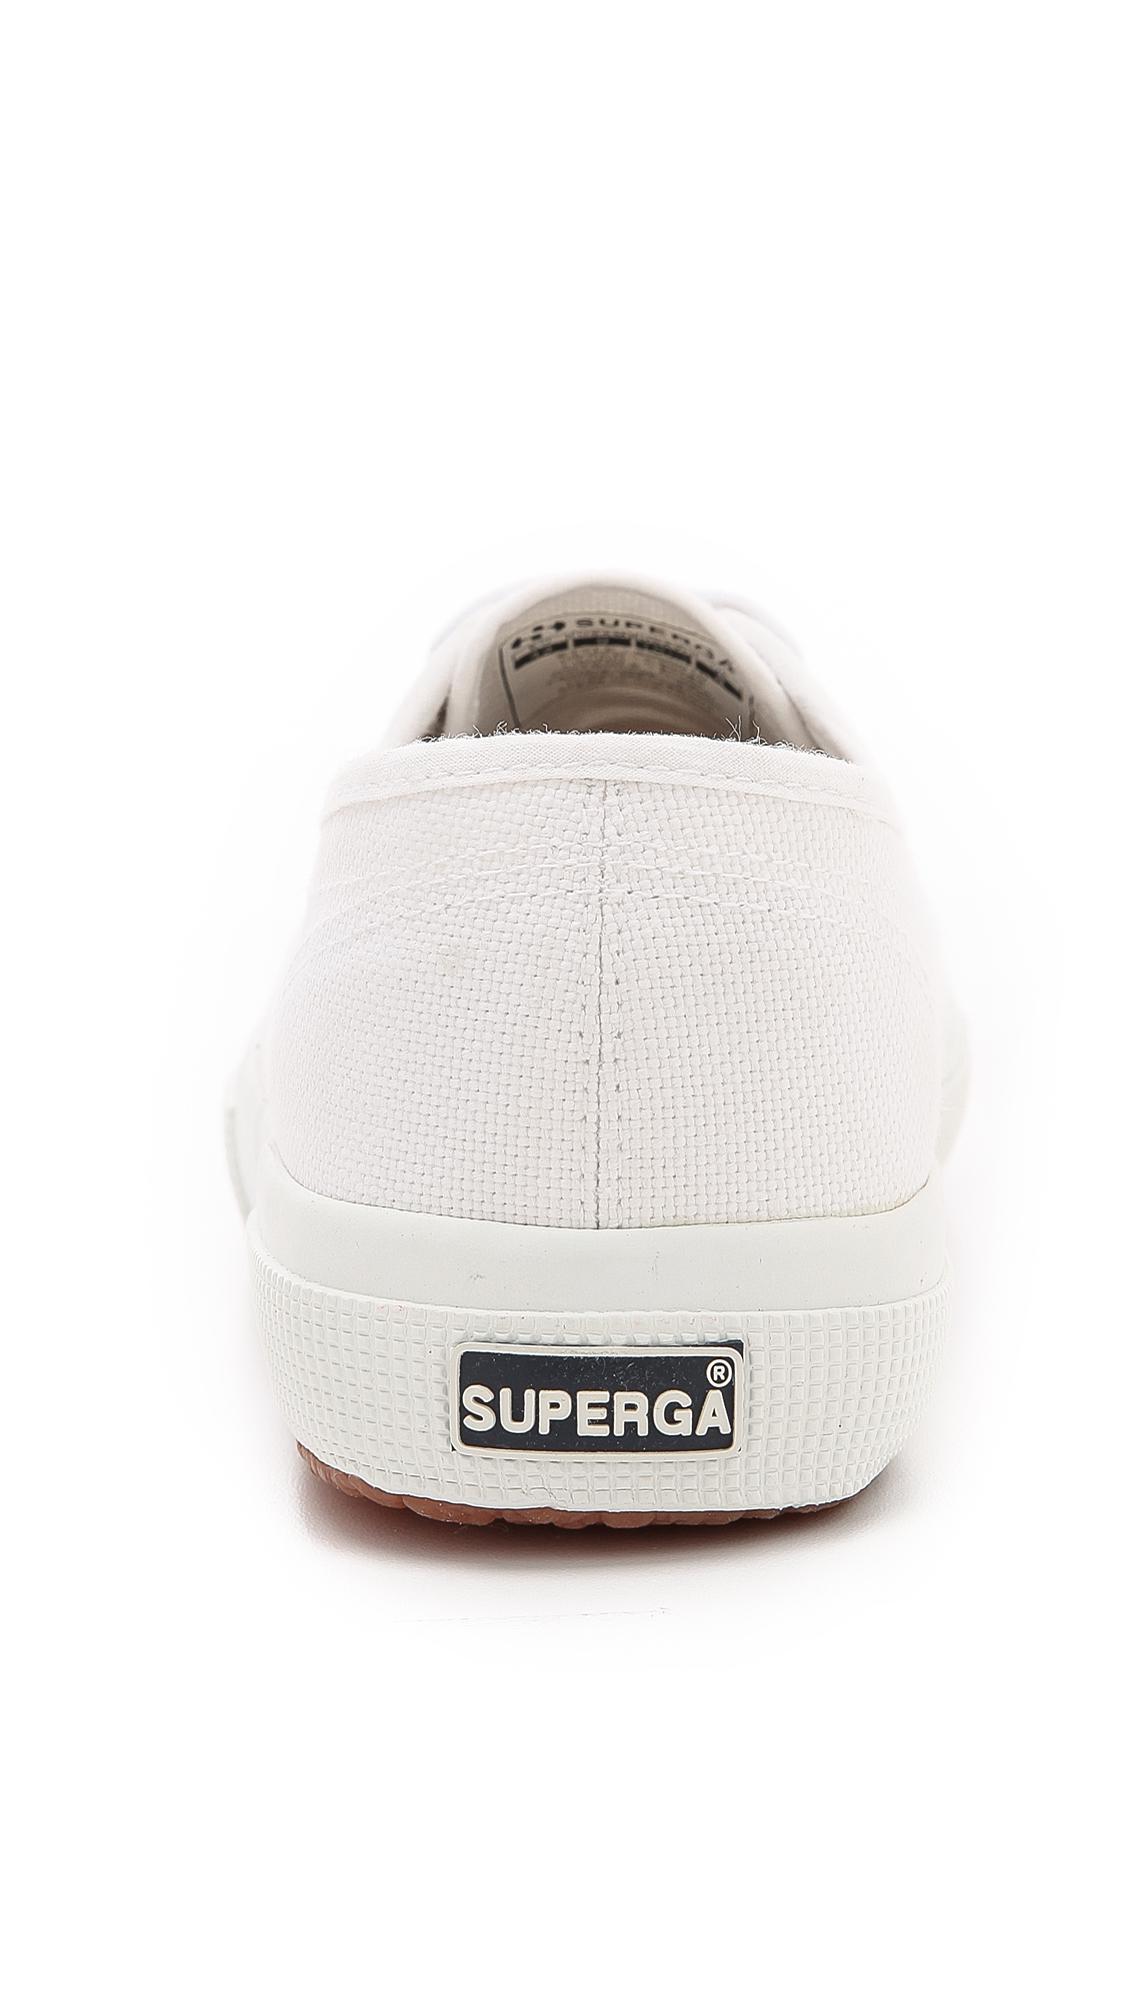 Superga 2750 Cotu Classic Sneakers in White for Men - Lyst